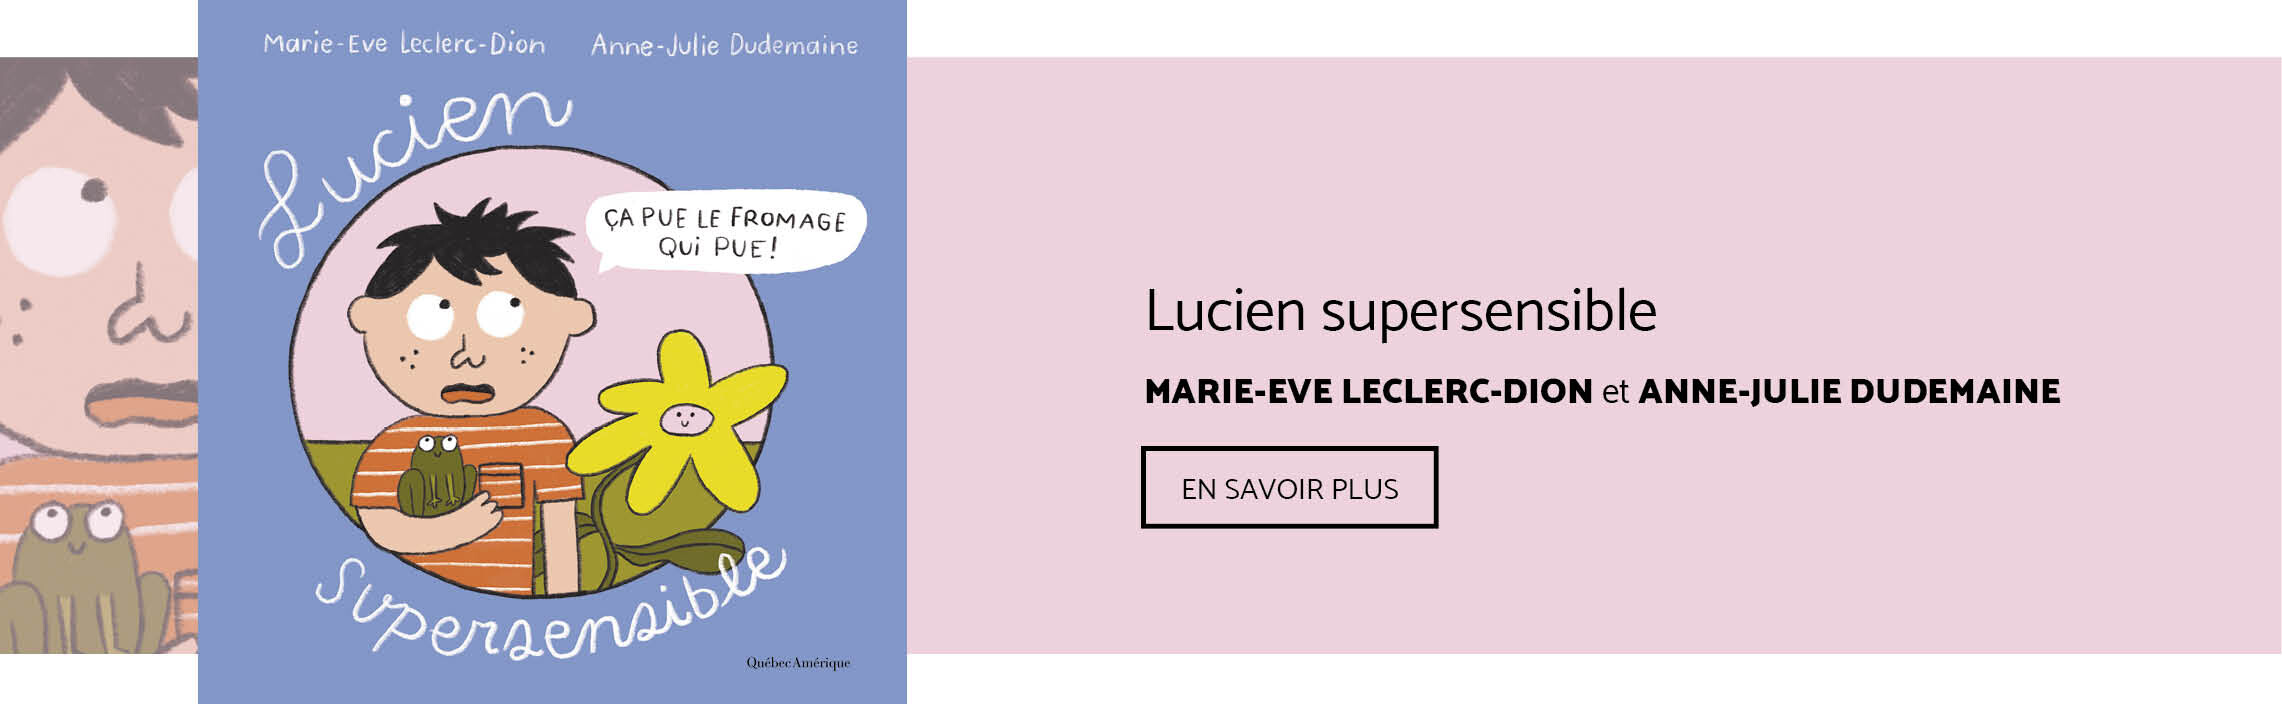 Lucien supersensible